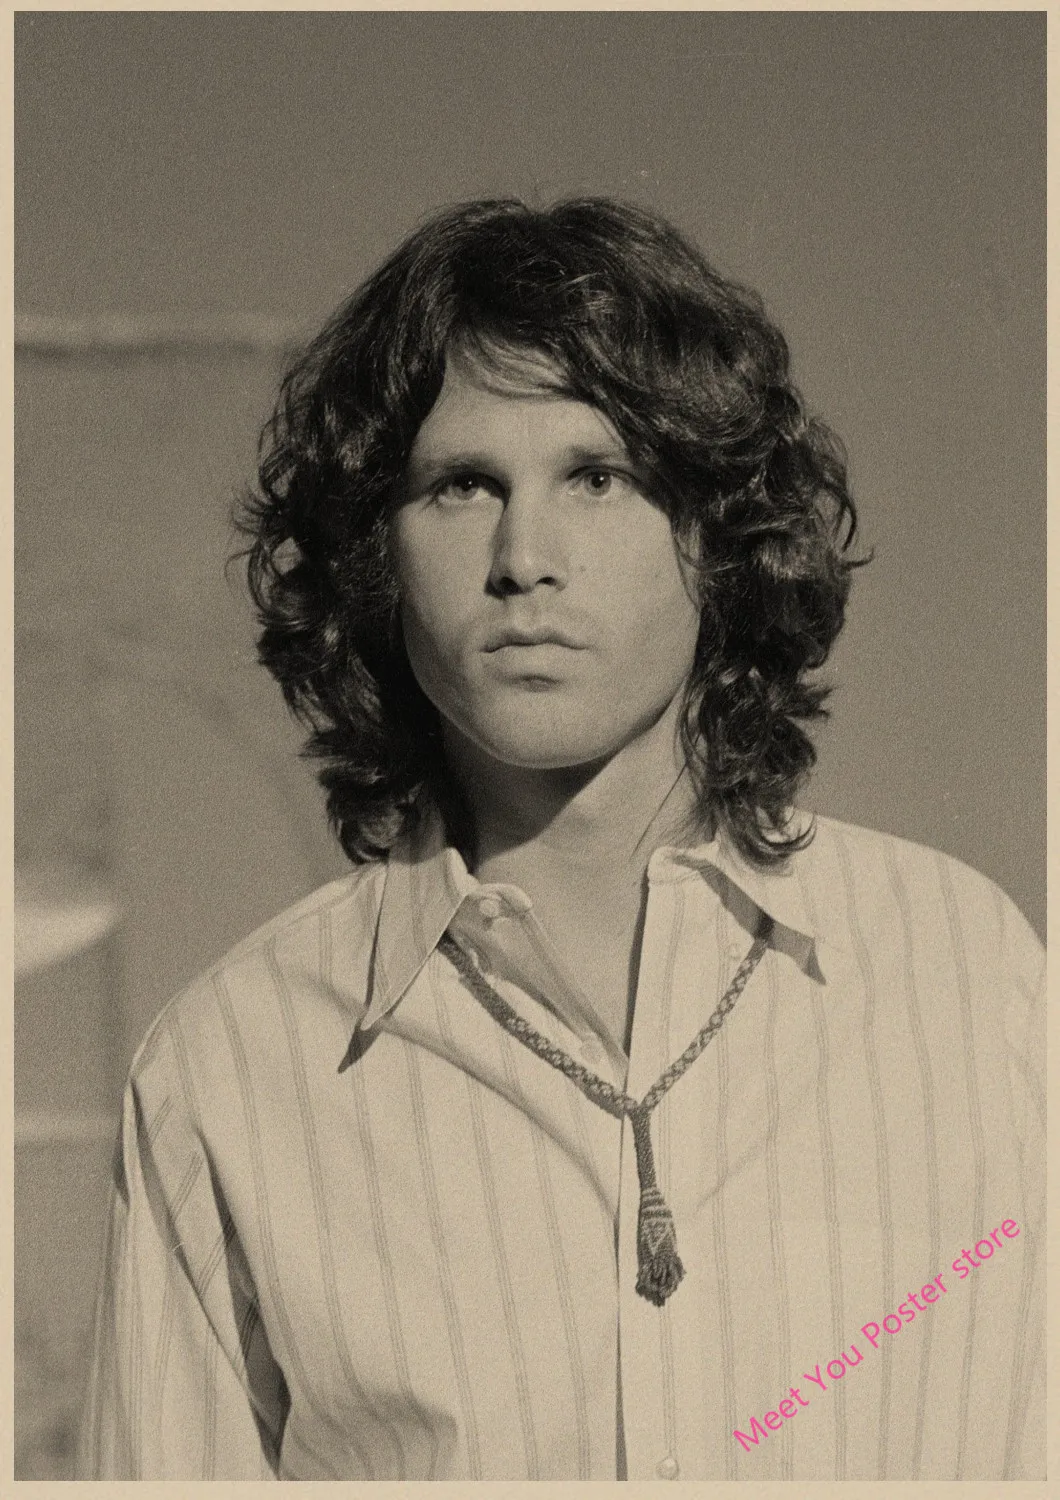 Sticker The Doors Psychedelic Jim Morrison Portrait Rock Band Singer Music Decal 